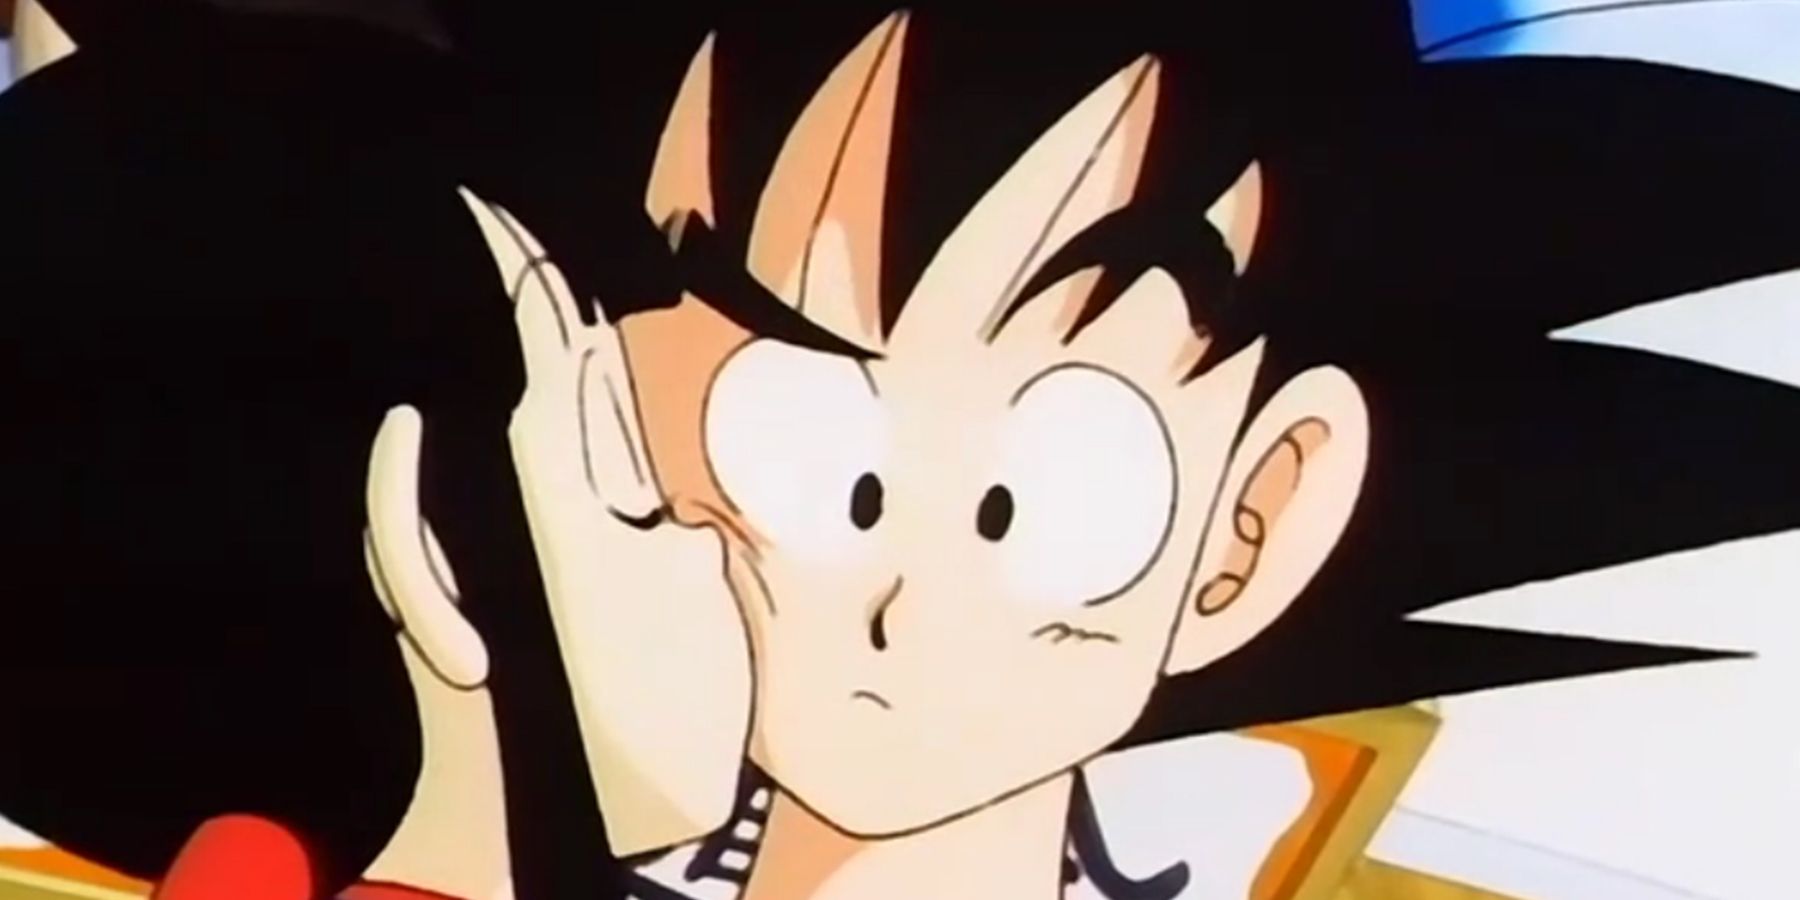 Chi-Chi kissing Goku on the cheek in Dragon Ball.